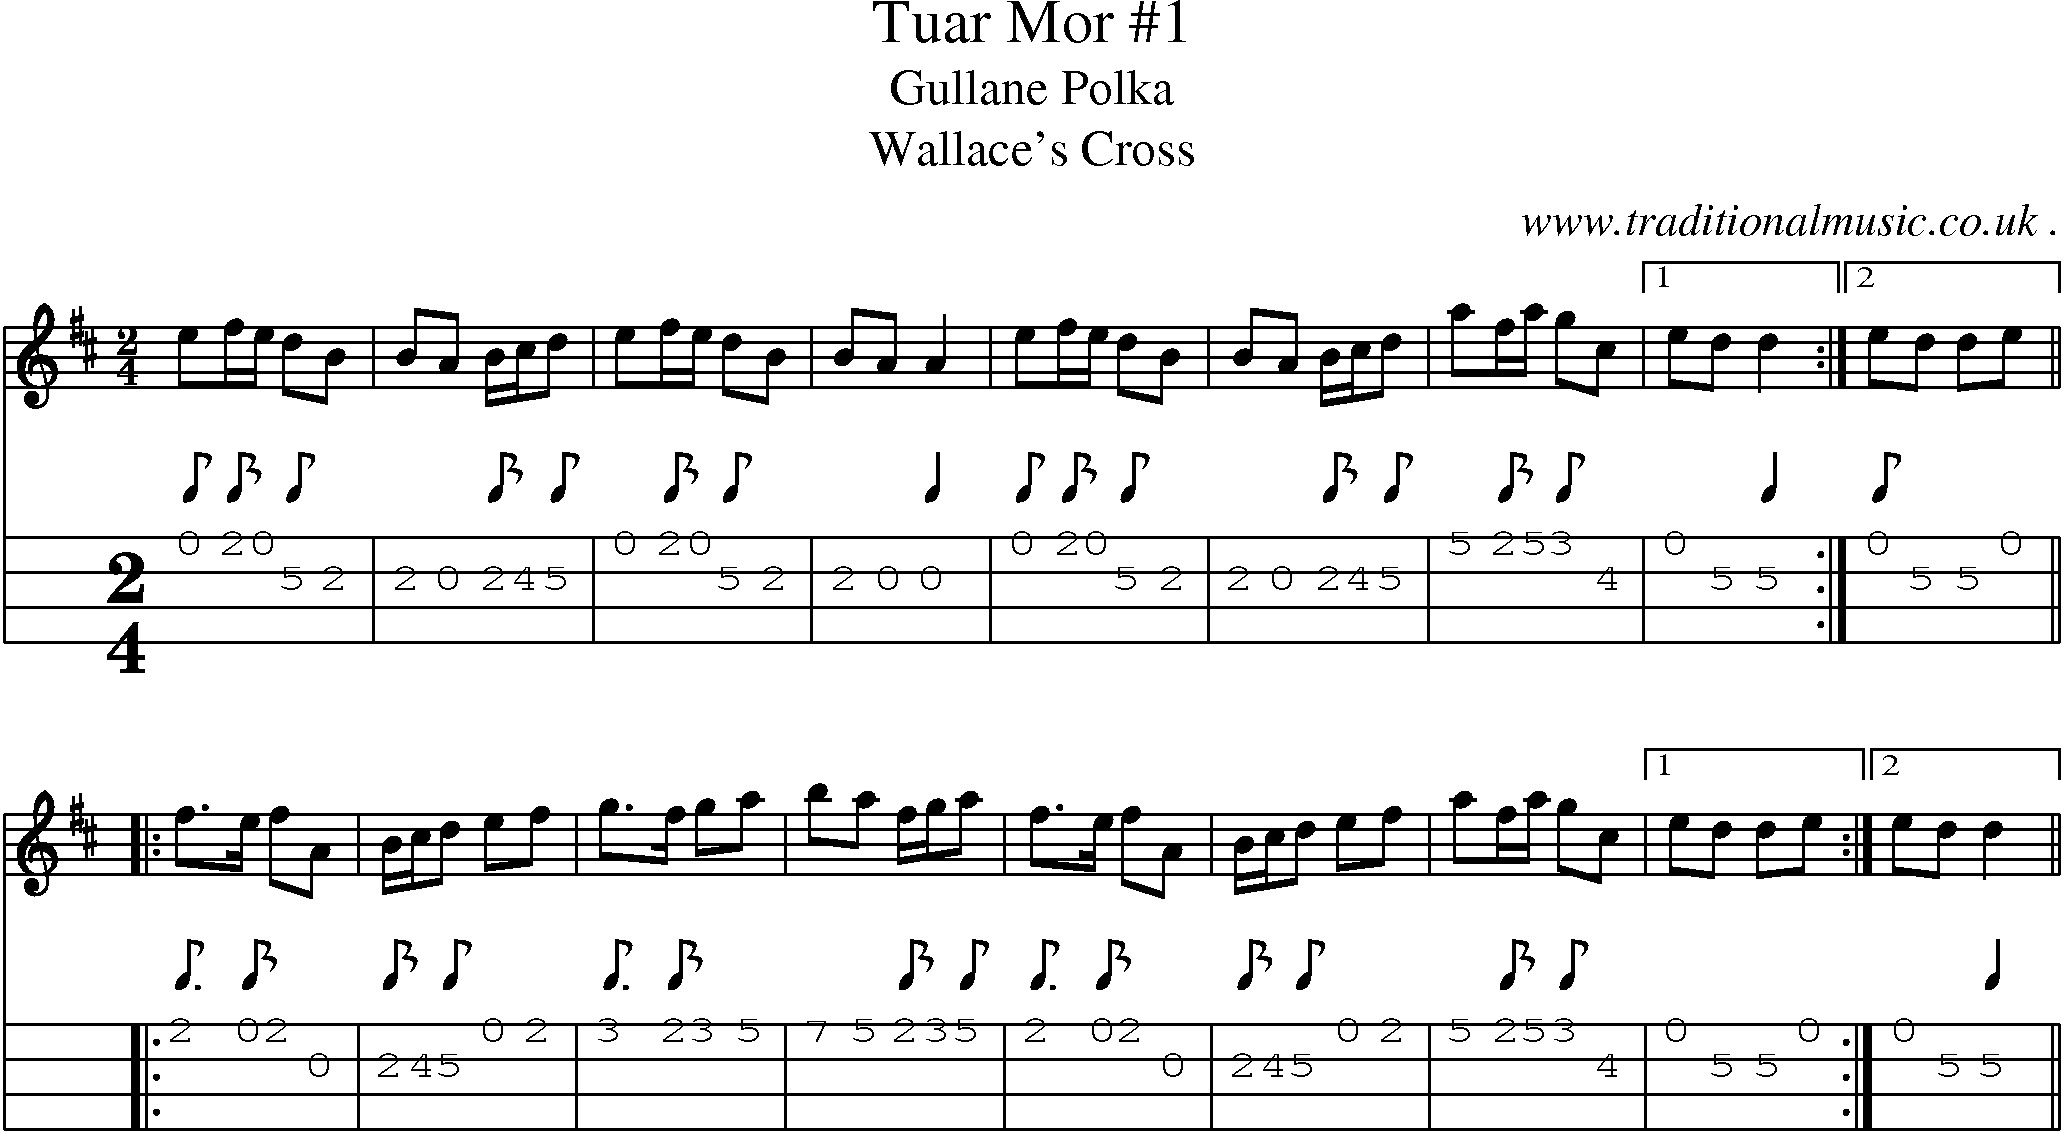 Sheet-Music and Mandolin Tabs for Tuar Mor 1